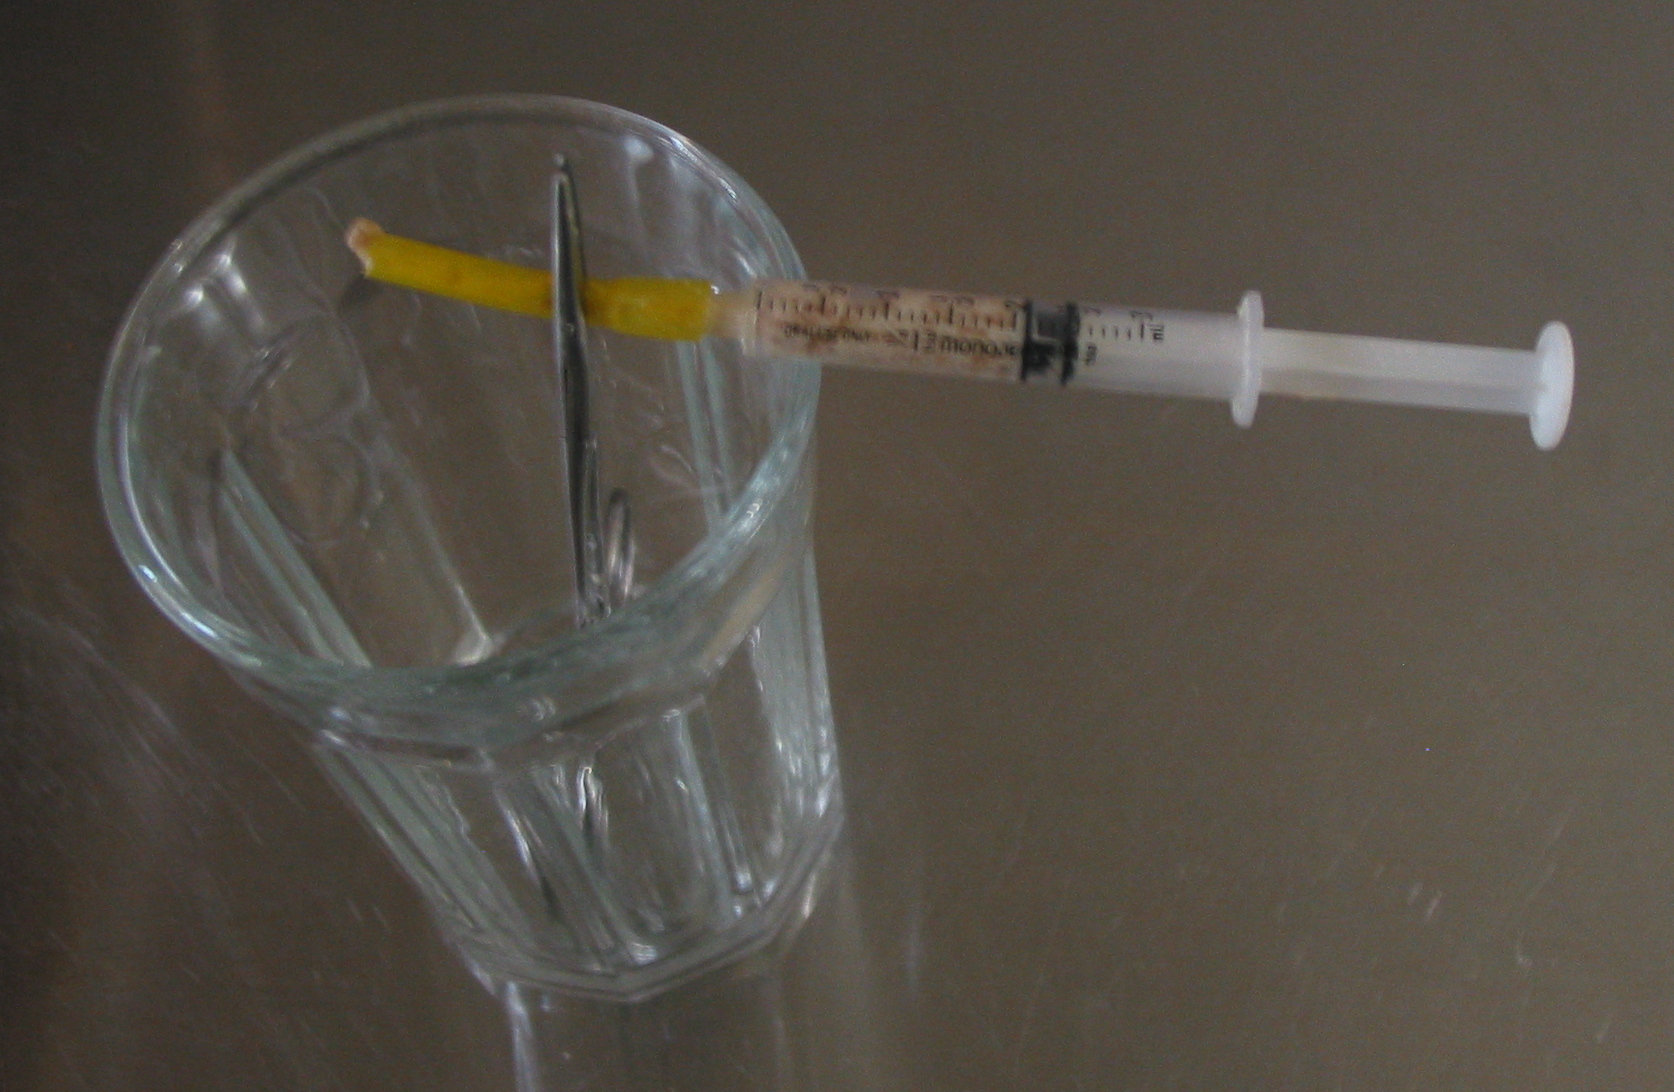 Using a syringe to measure proof progress